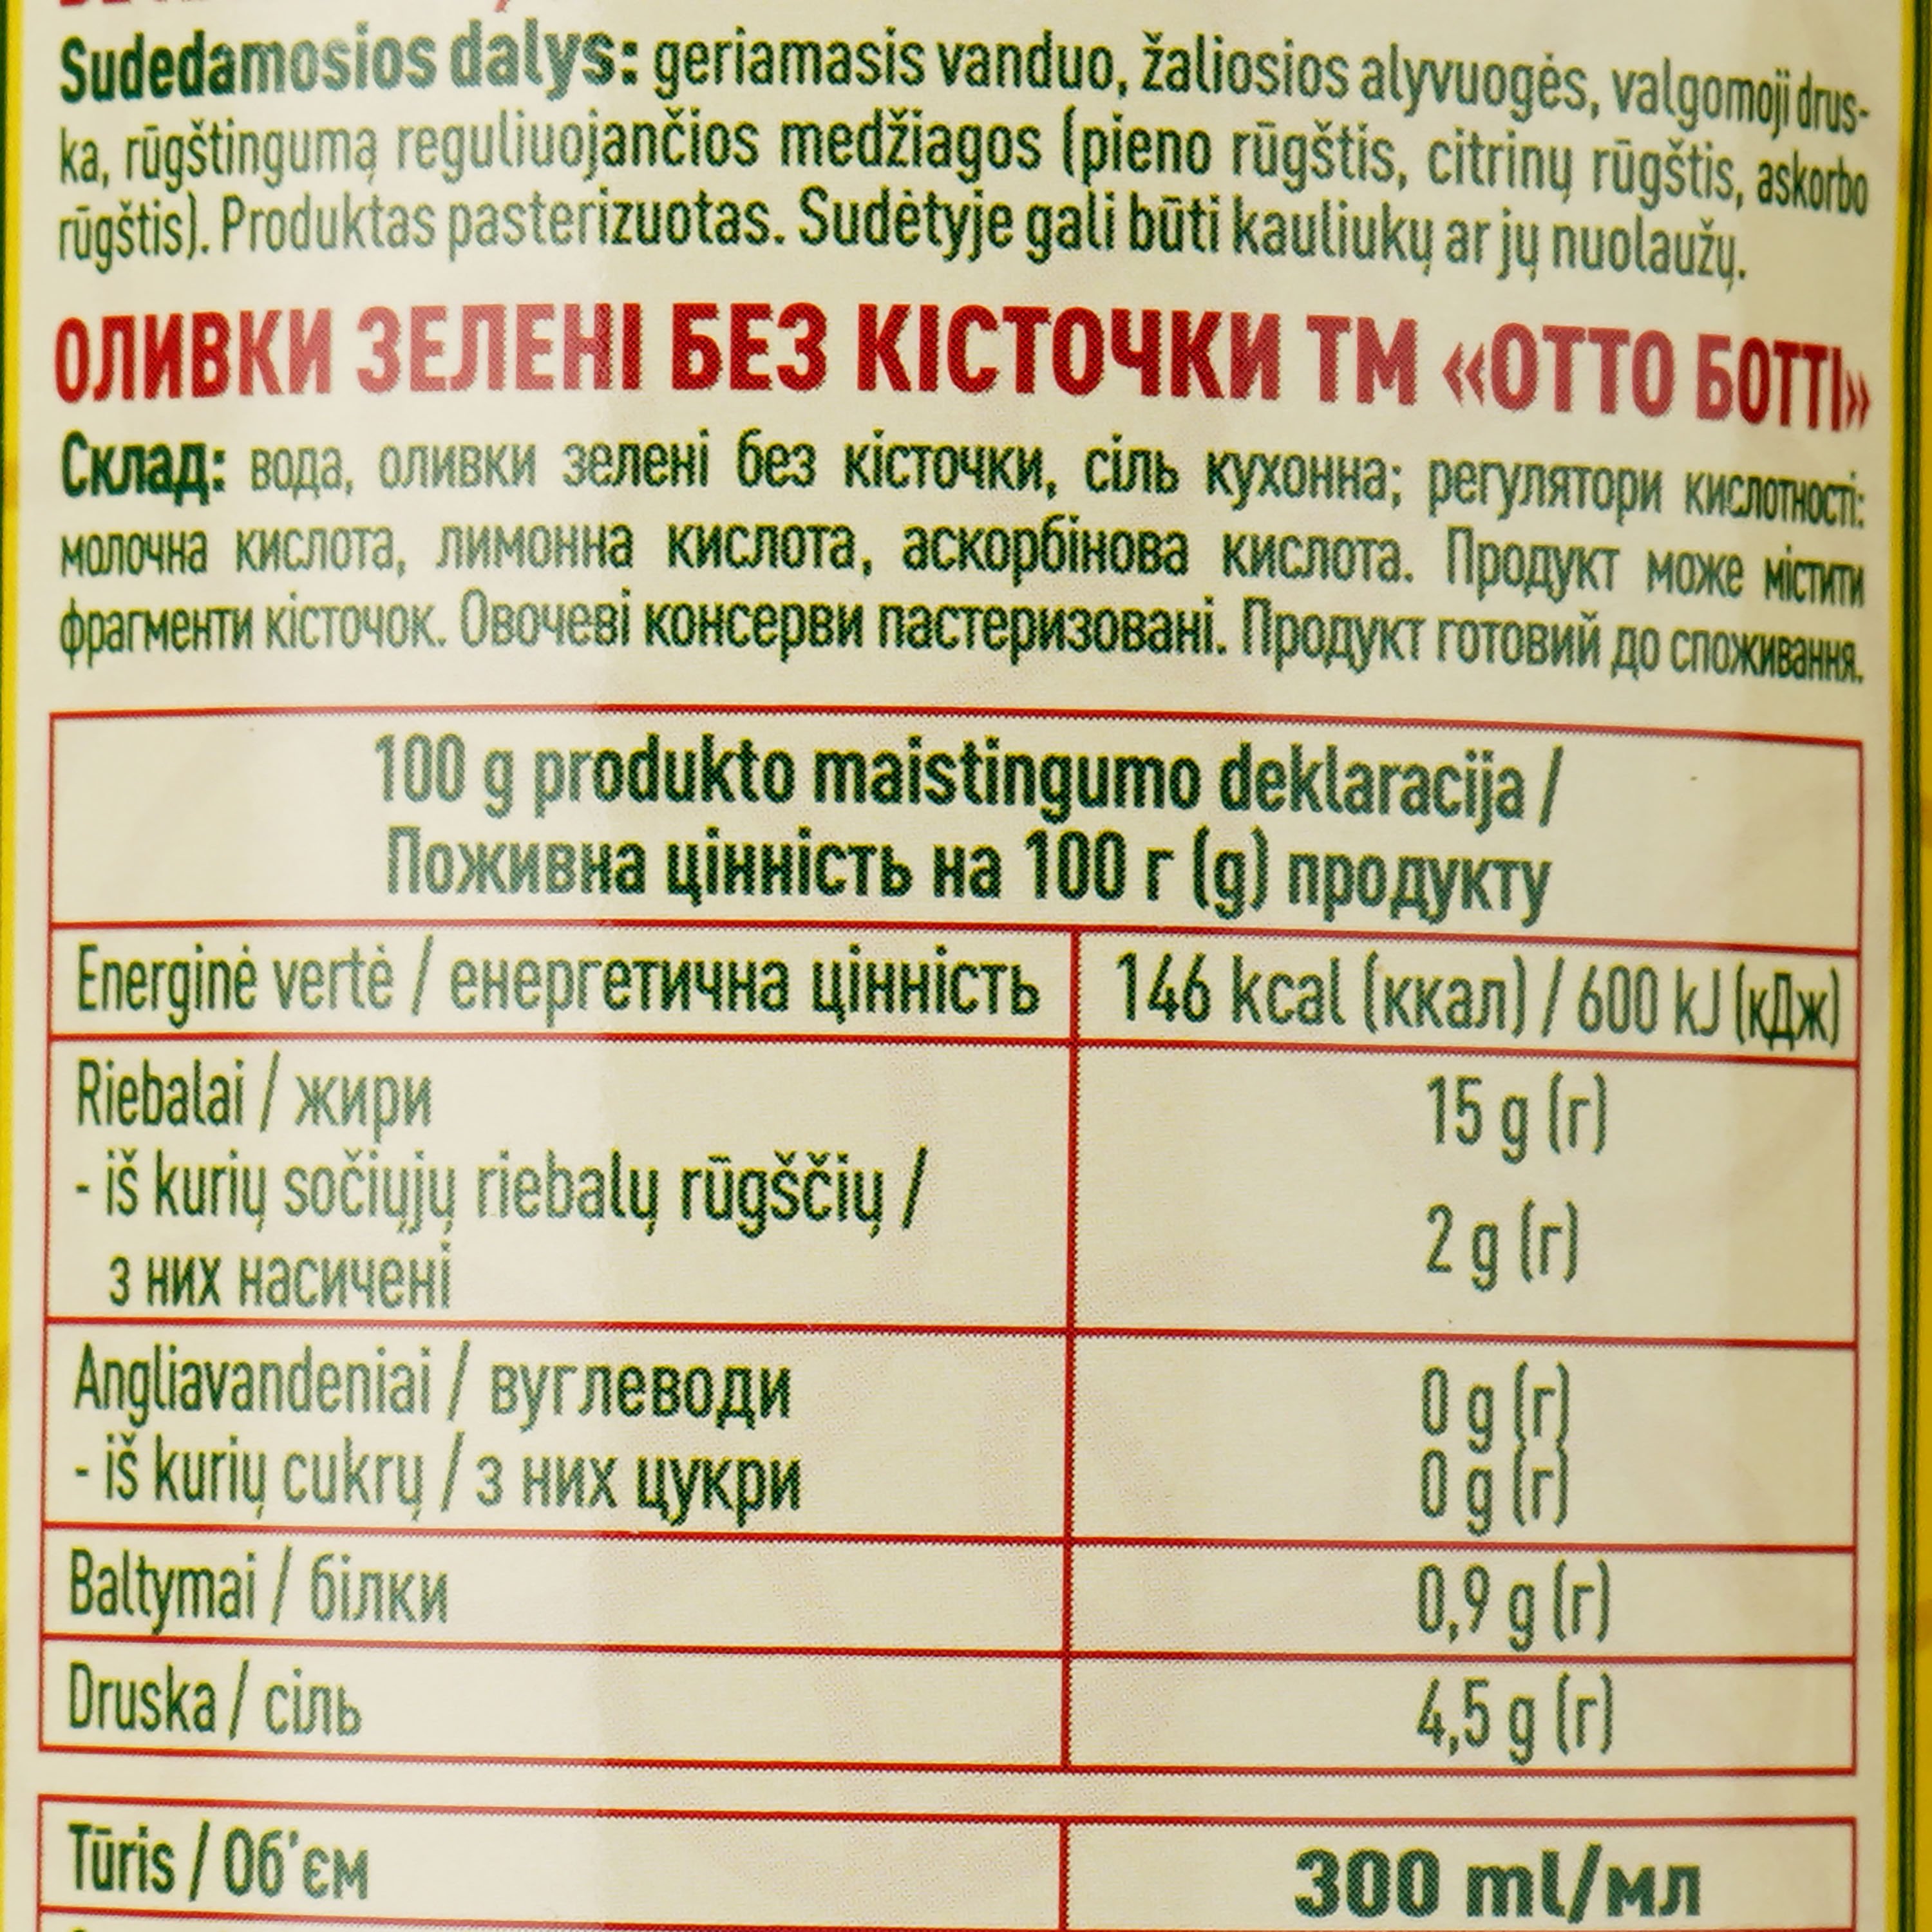 Оливки Otto Botti зеленые без косточек 300 мл (926284) - фото 3